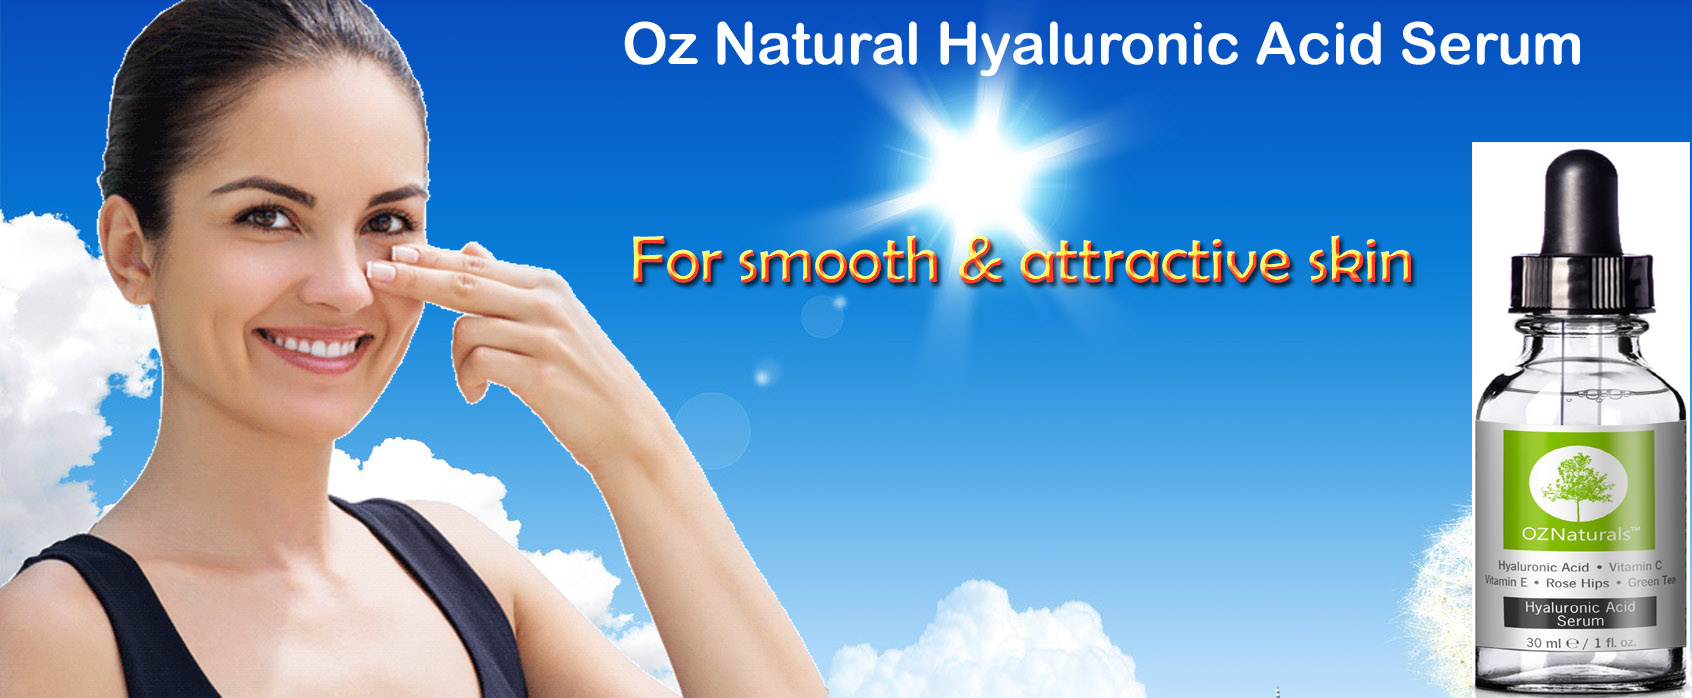 Oz Naturals Hyaluronic Acid Serum